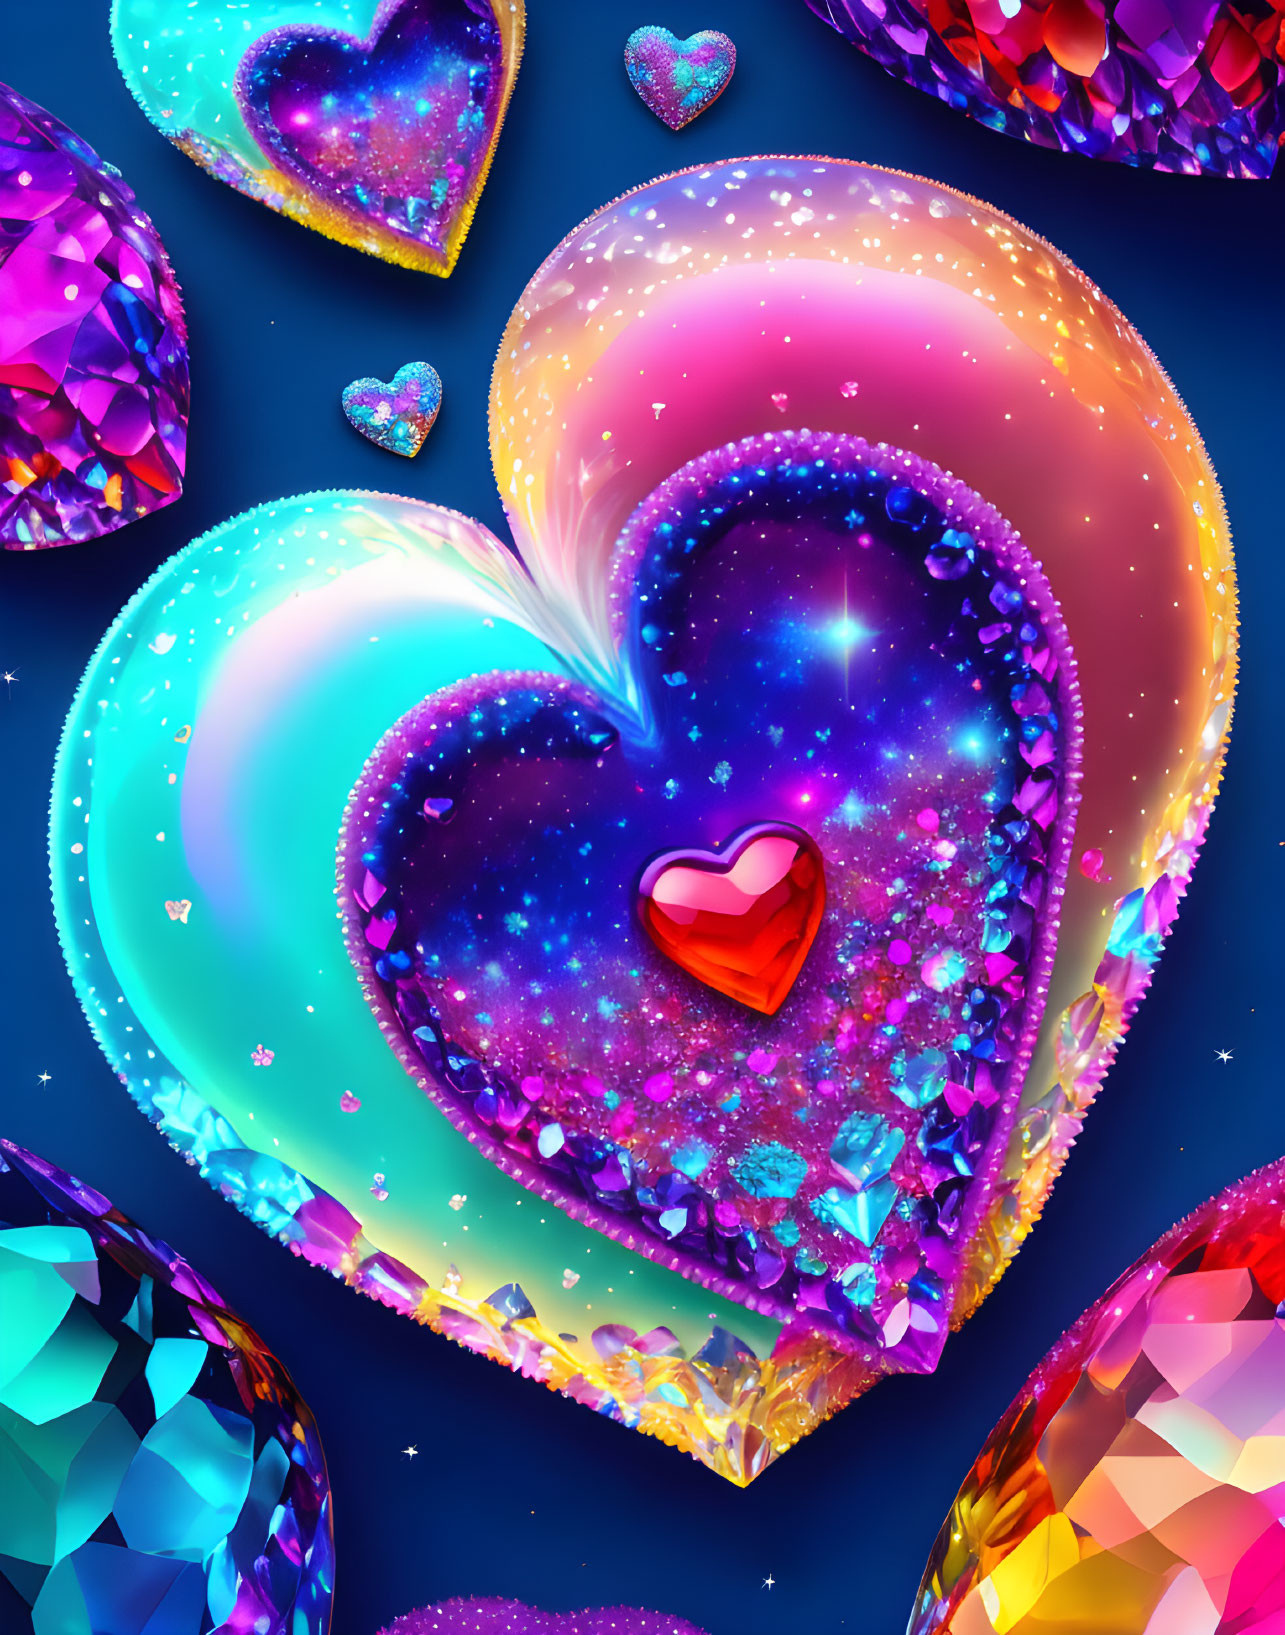 Colorful heart-shaped gems with cosmic nebula inside, glowing aura on dark background